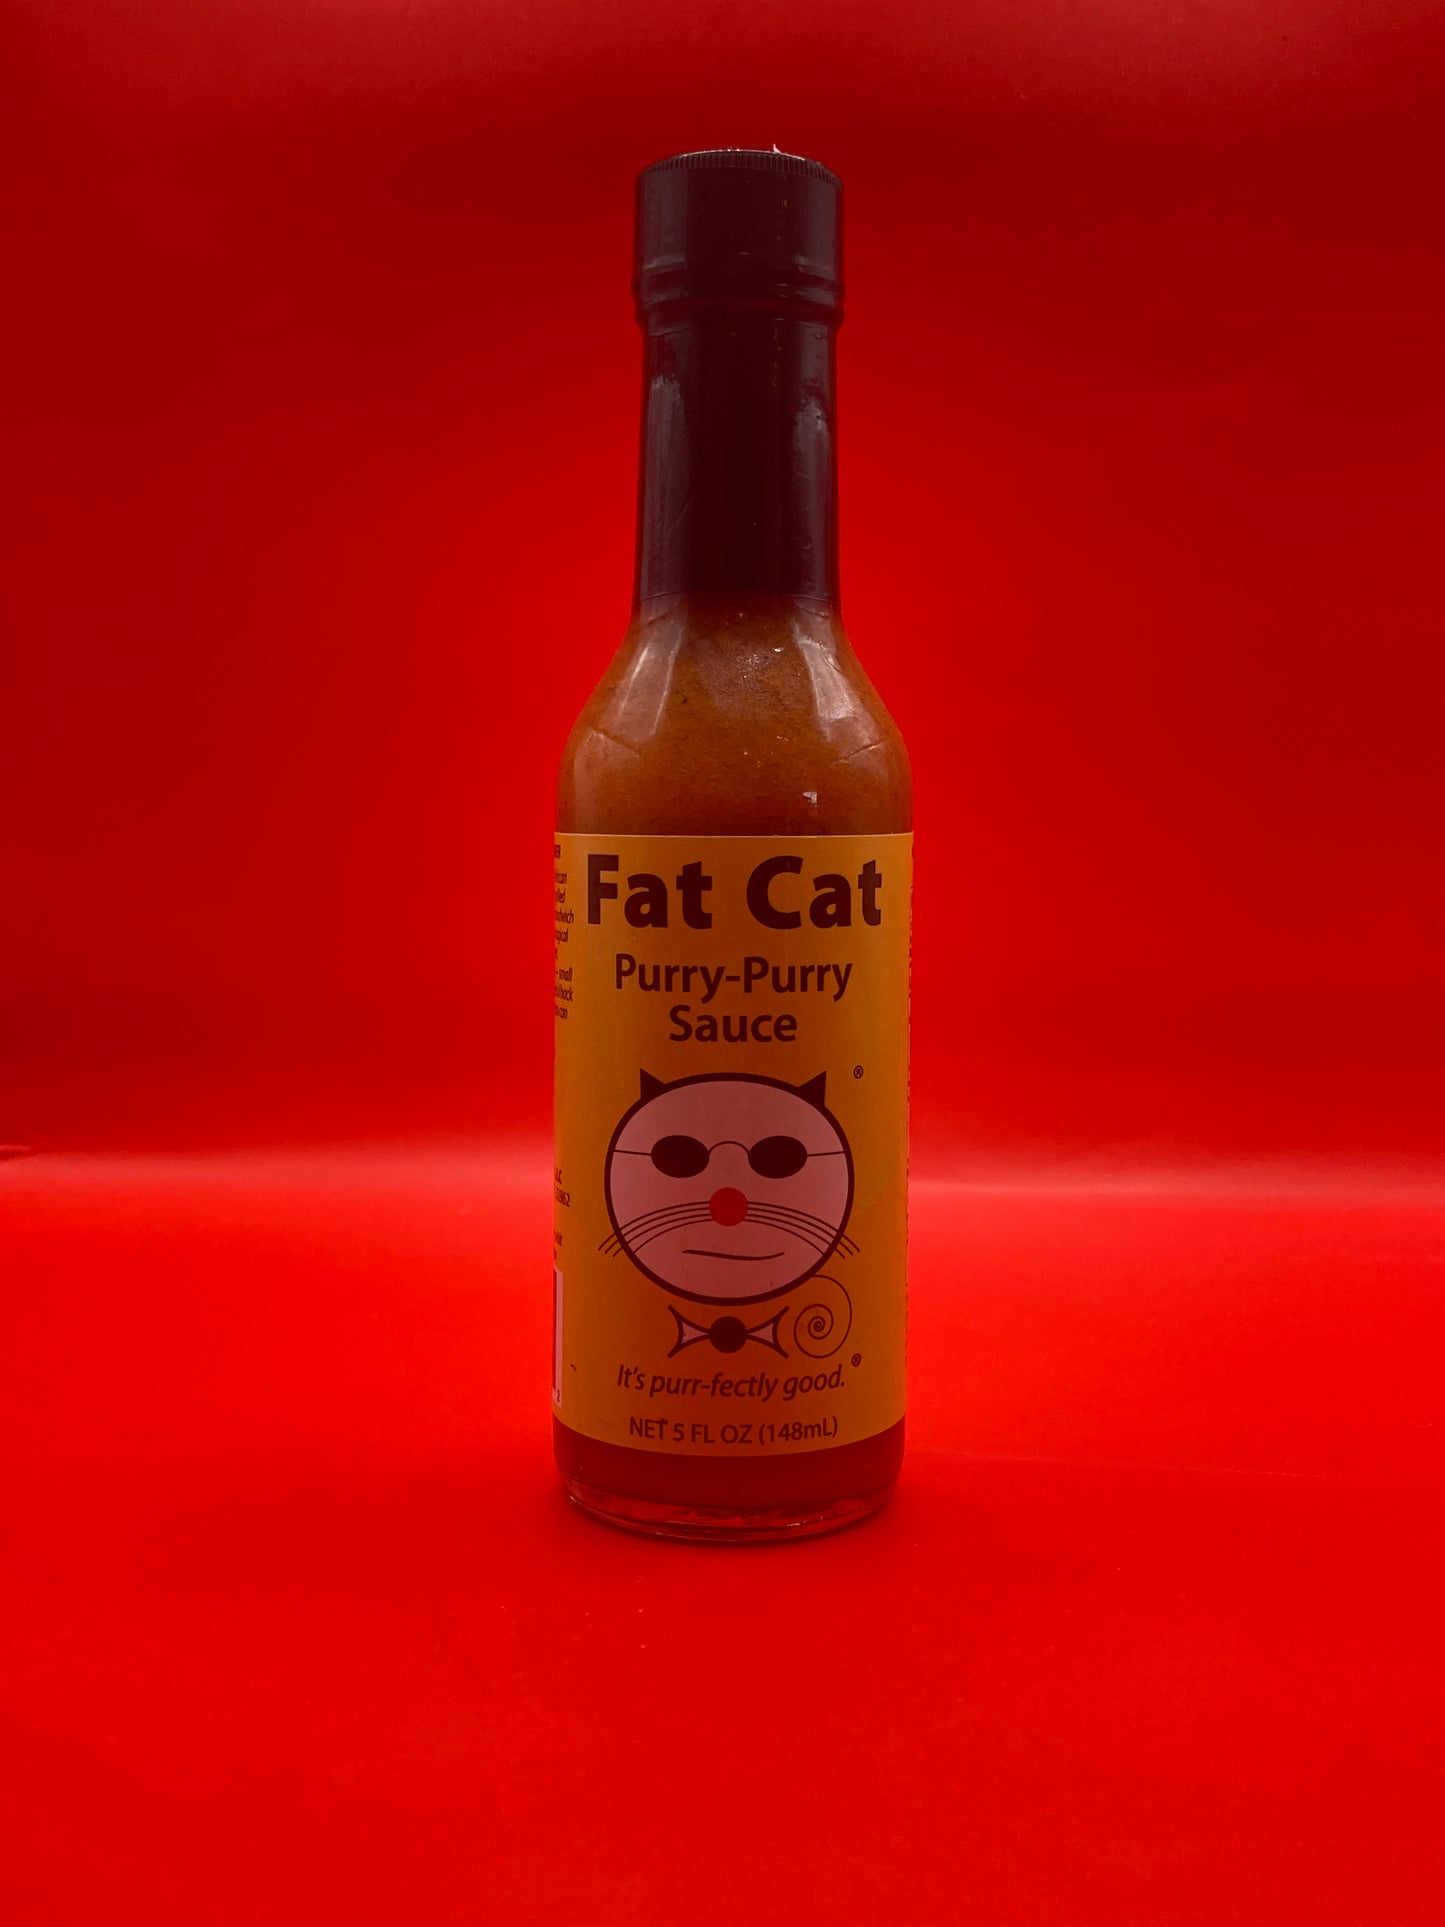 Fat Cat Purry-Purry Hot Sauce